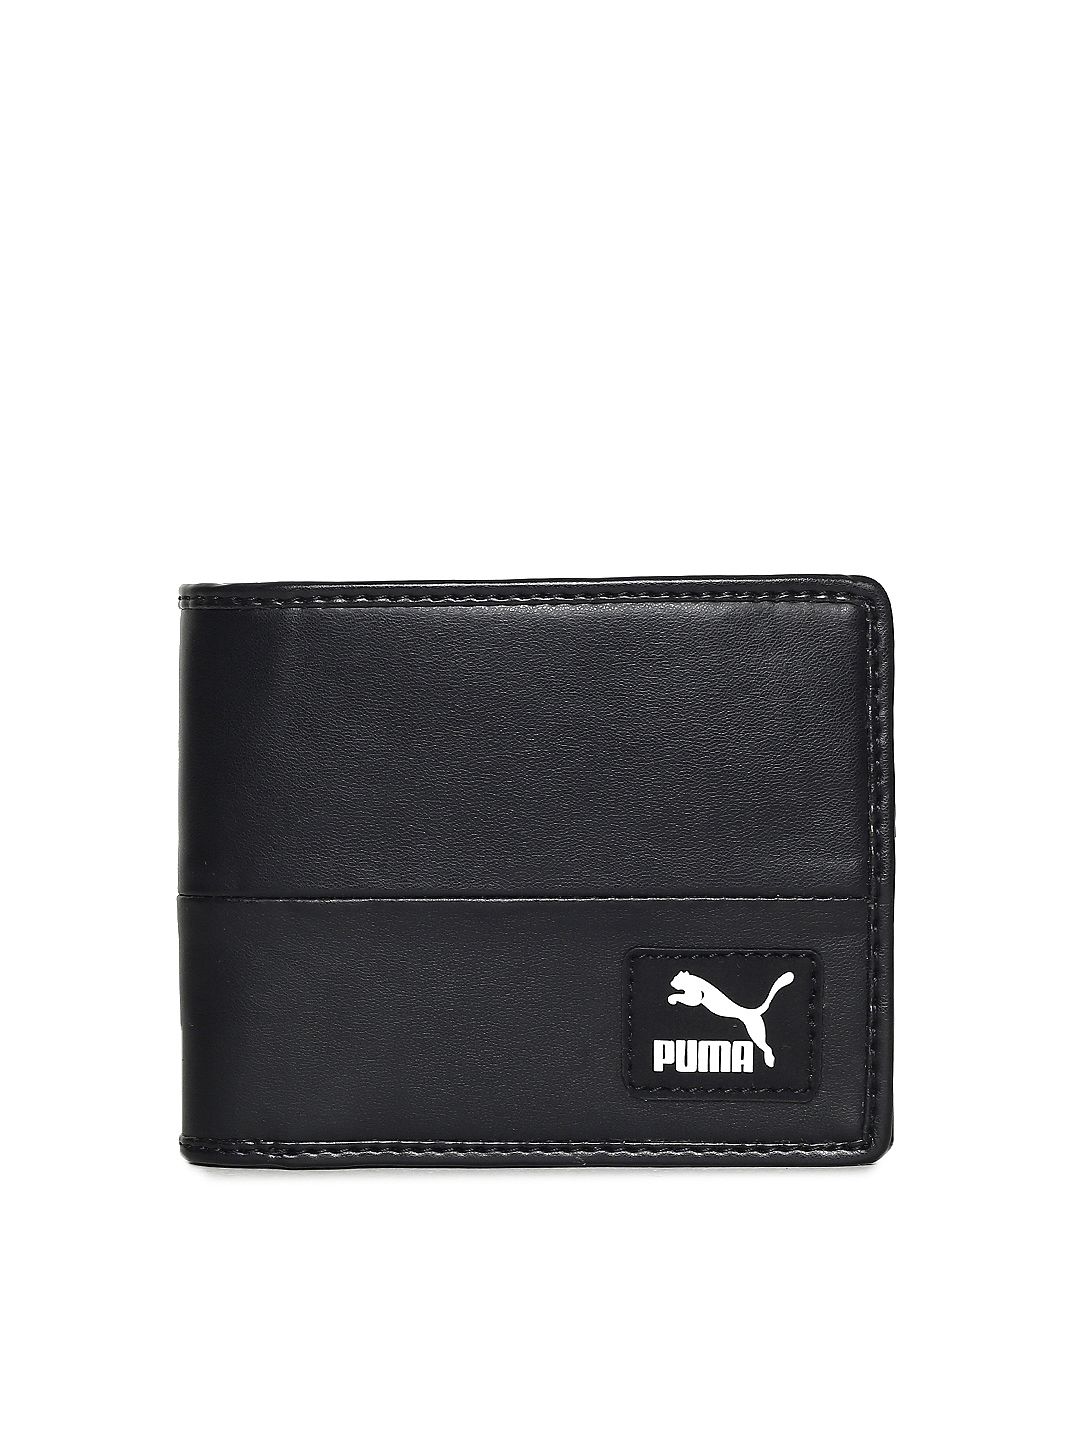 puma wallets black